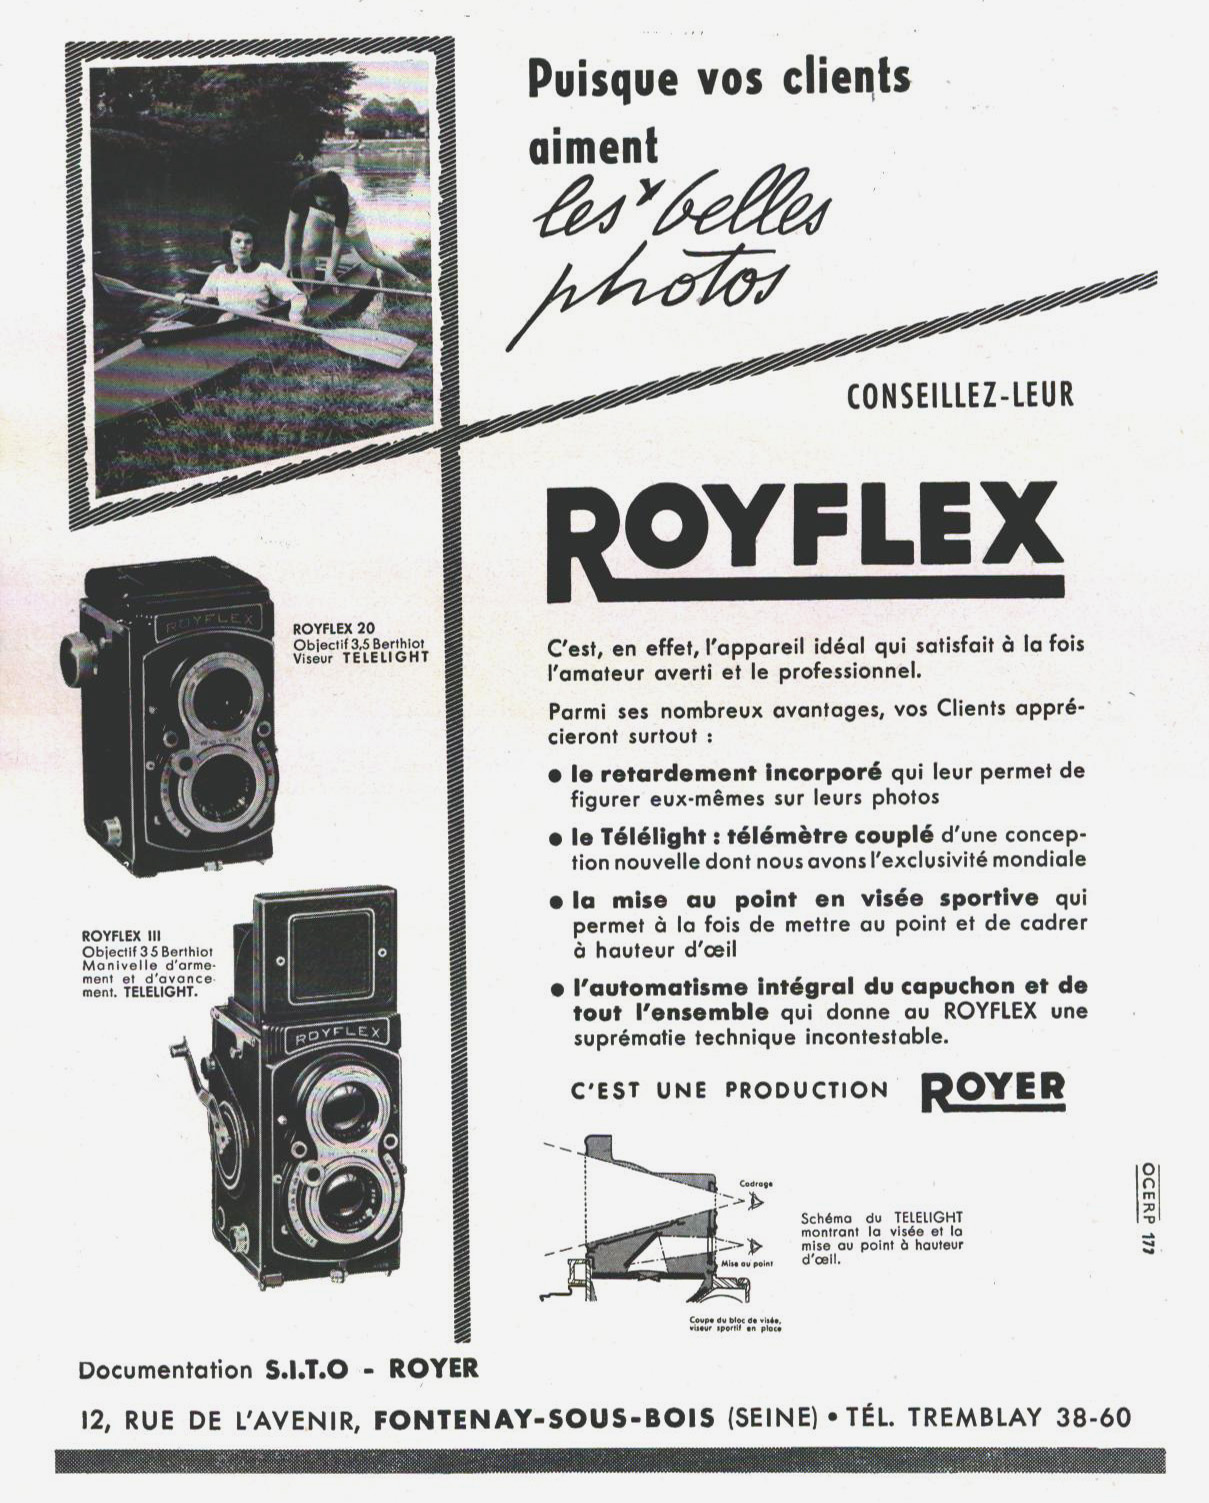 Wallpaper 0448-7  S.I.T.O  Royflex III automatique, collection AMI Appareils photos